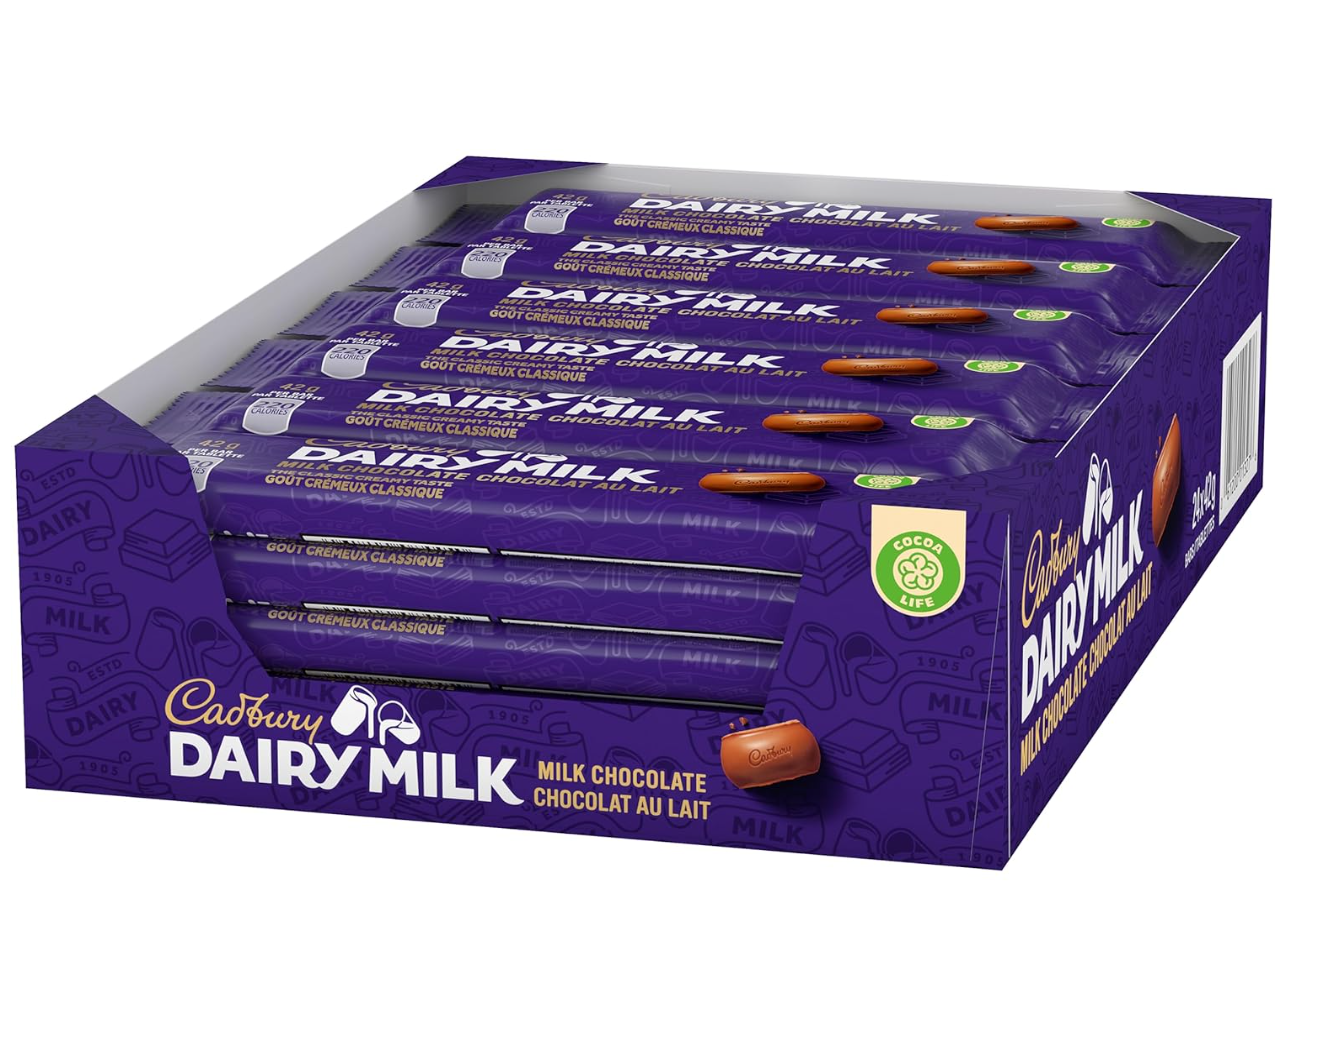 Cadbury Dairy Milk Chocolate Bar 95g ($2.45/Unit)